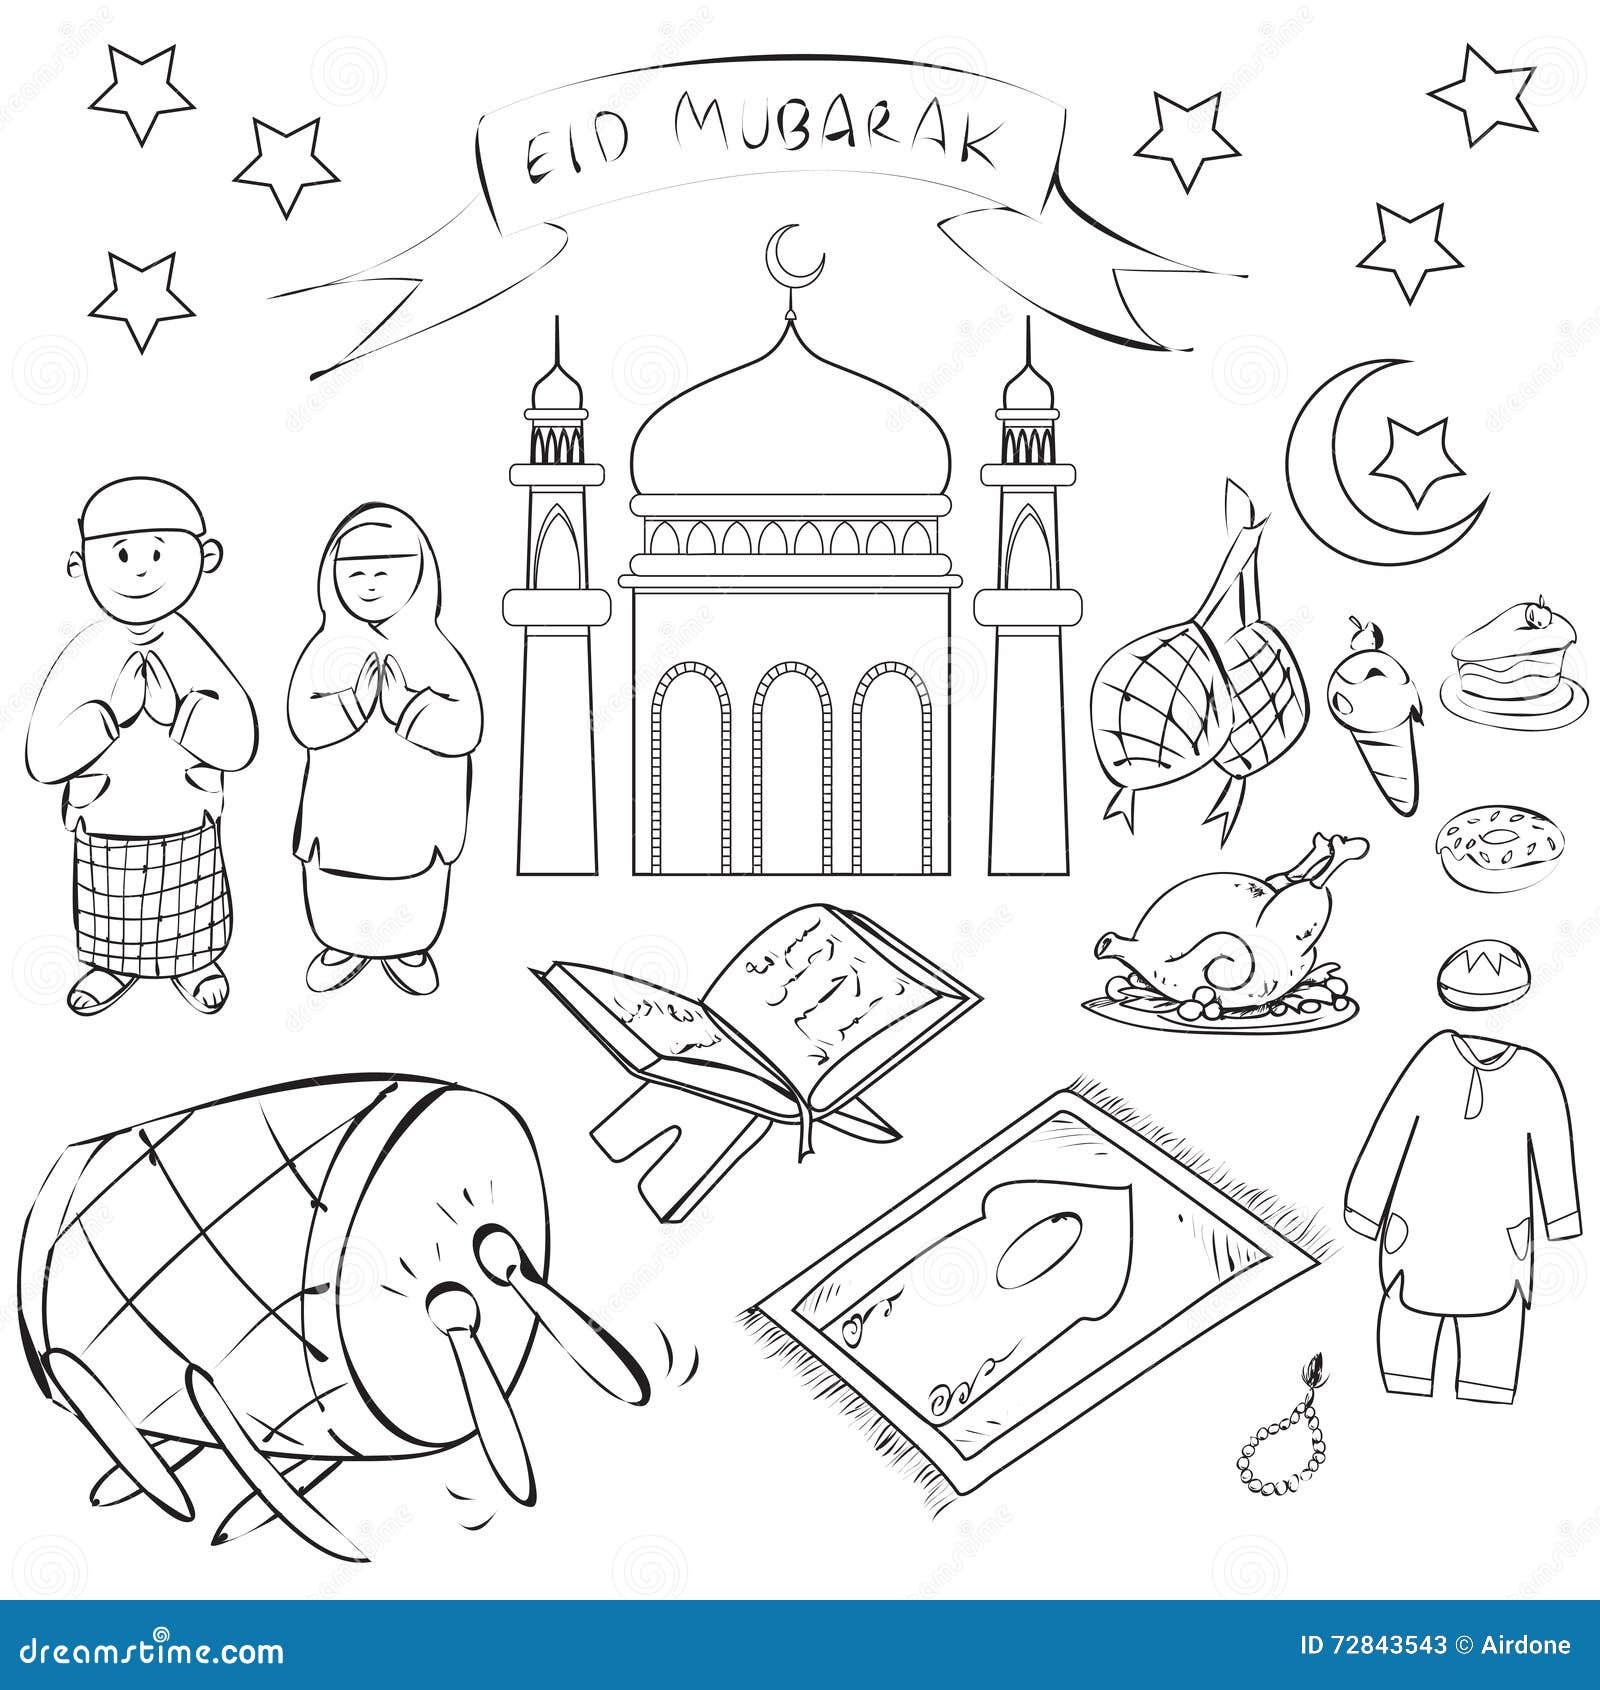 Celebrate Eid Mubarak with this stunning drawing